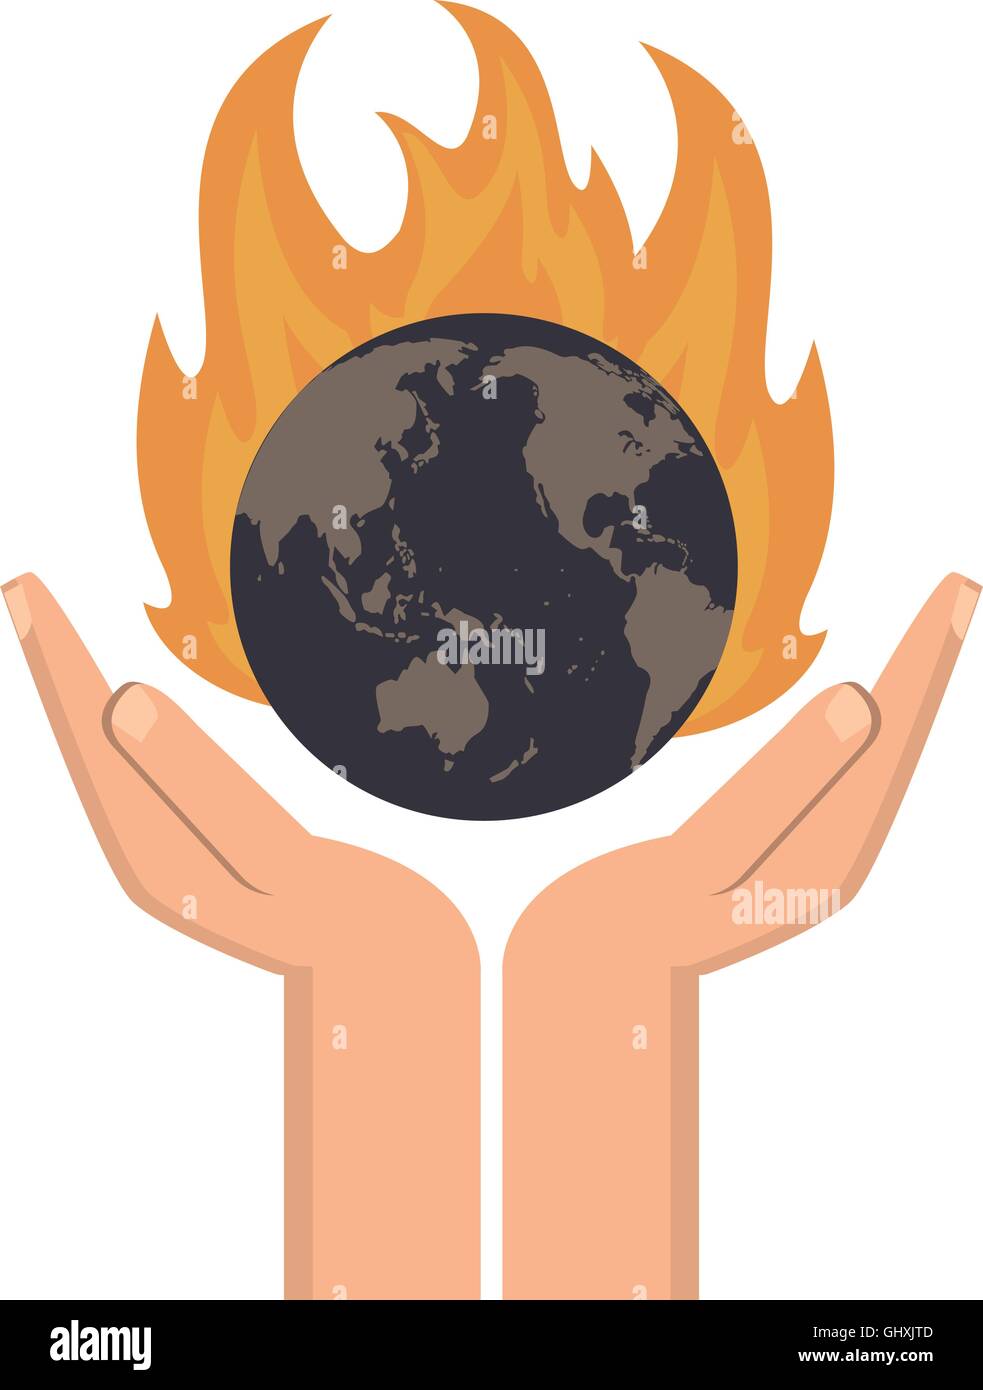 earth globe on fire icon Stock Vector